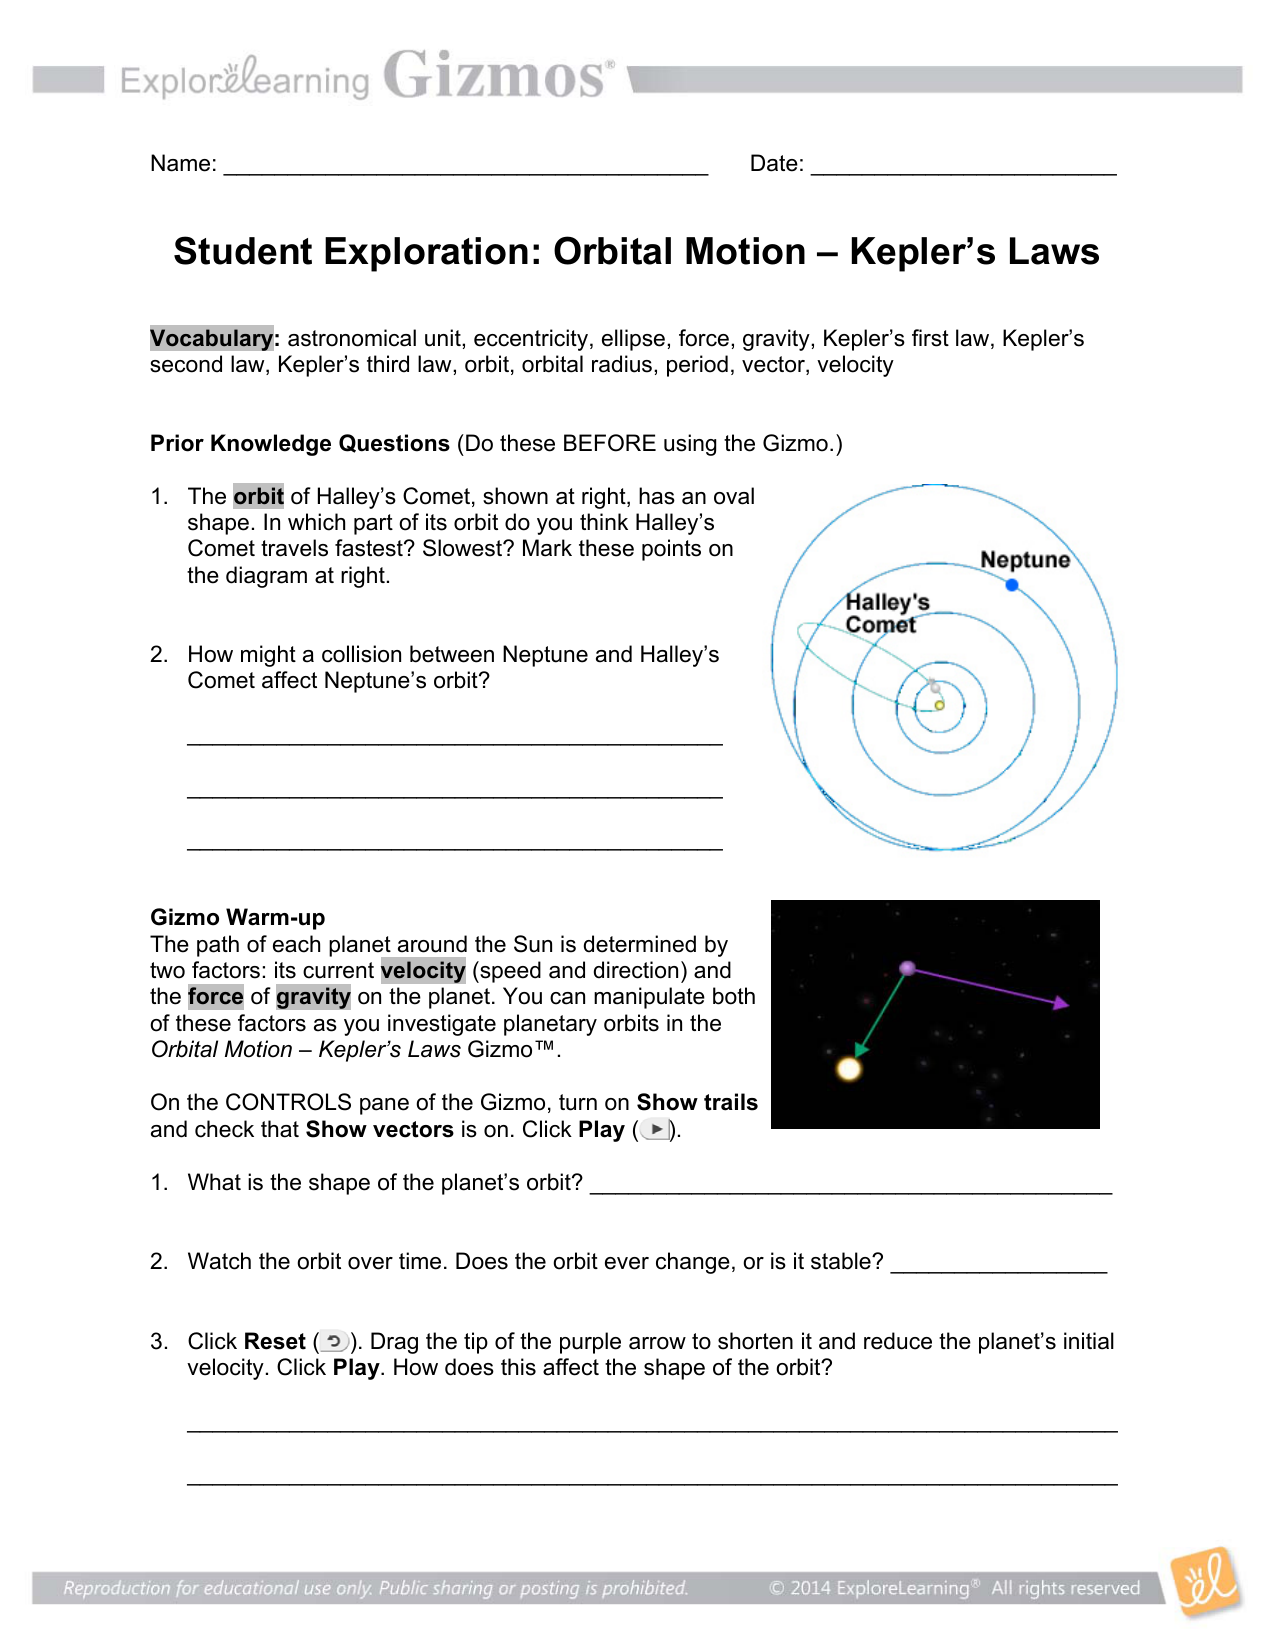 Student Exploration Orbital Motion Keplers Laws